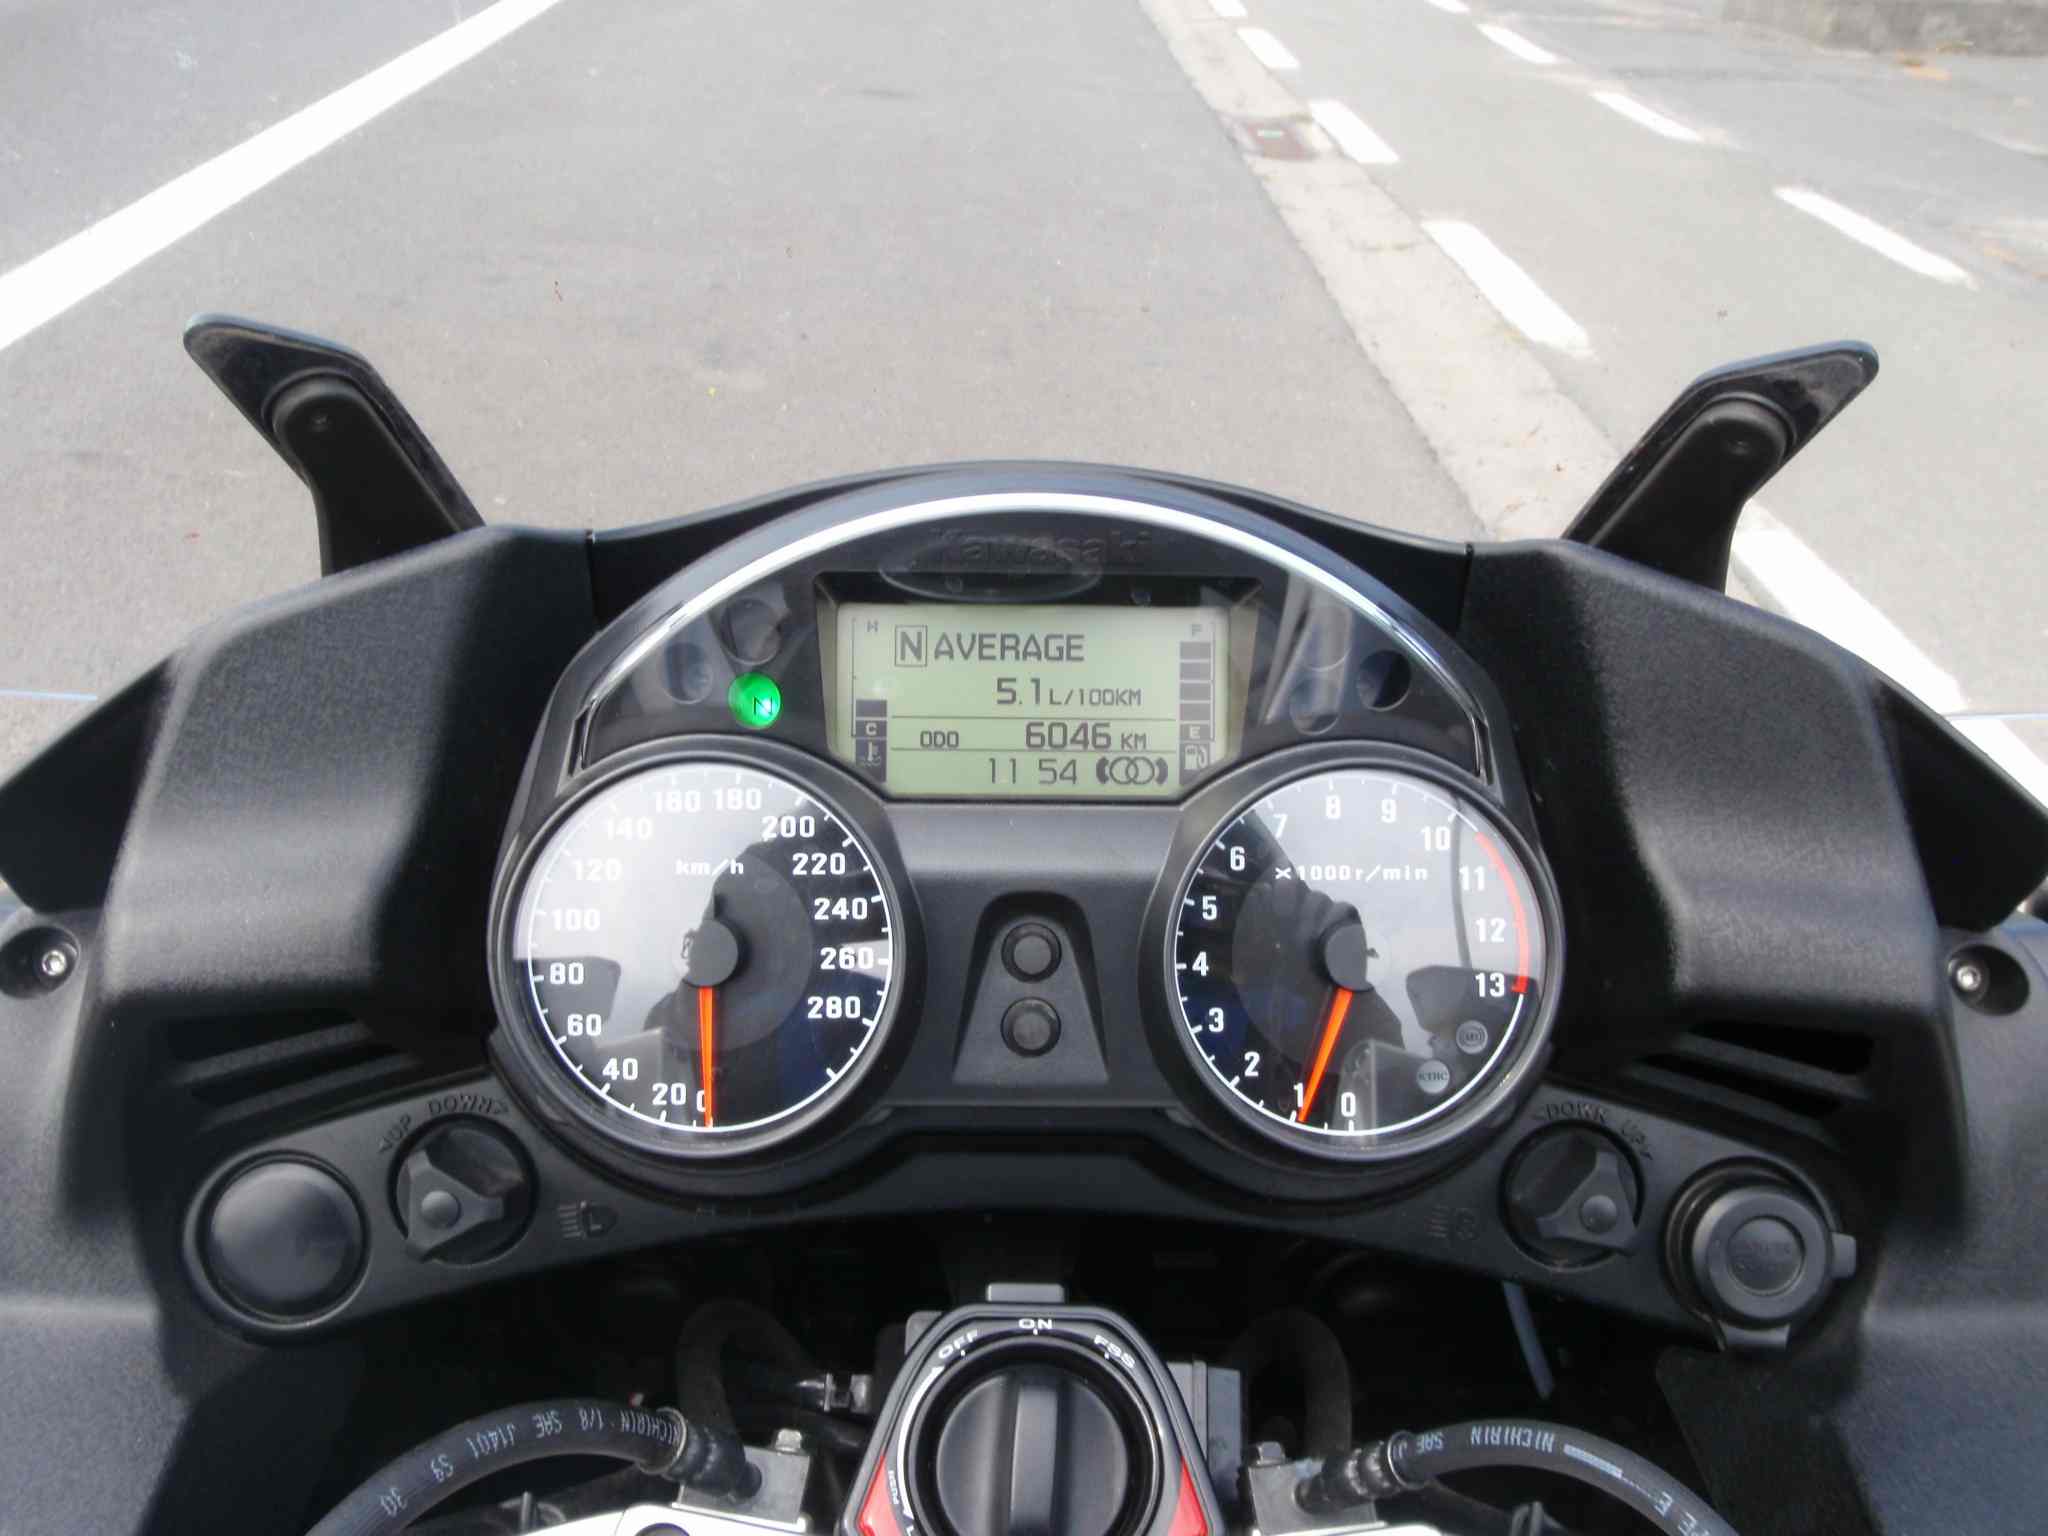 Тест-драйв мотоцикла Yamaha FJR1300